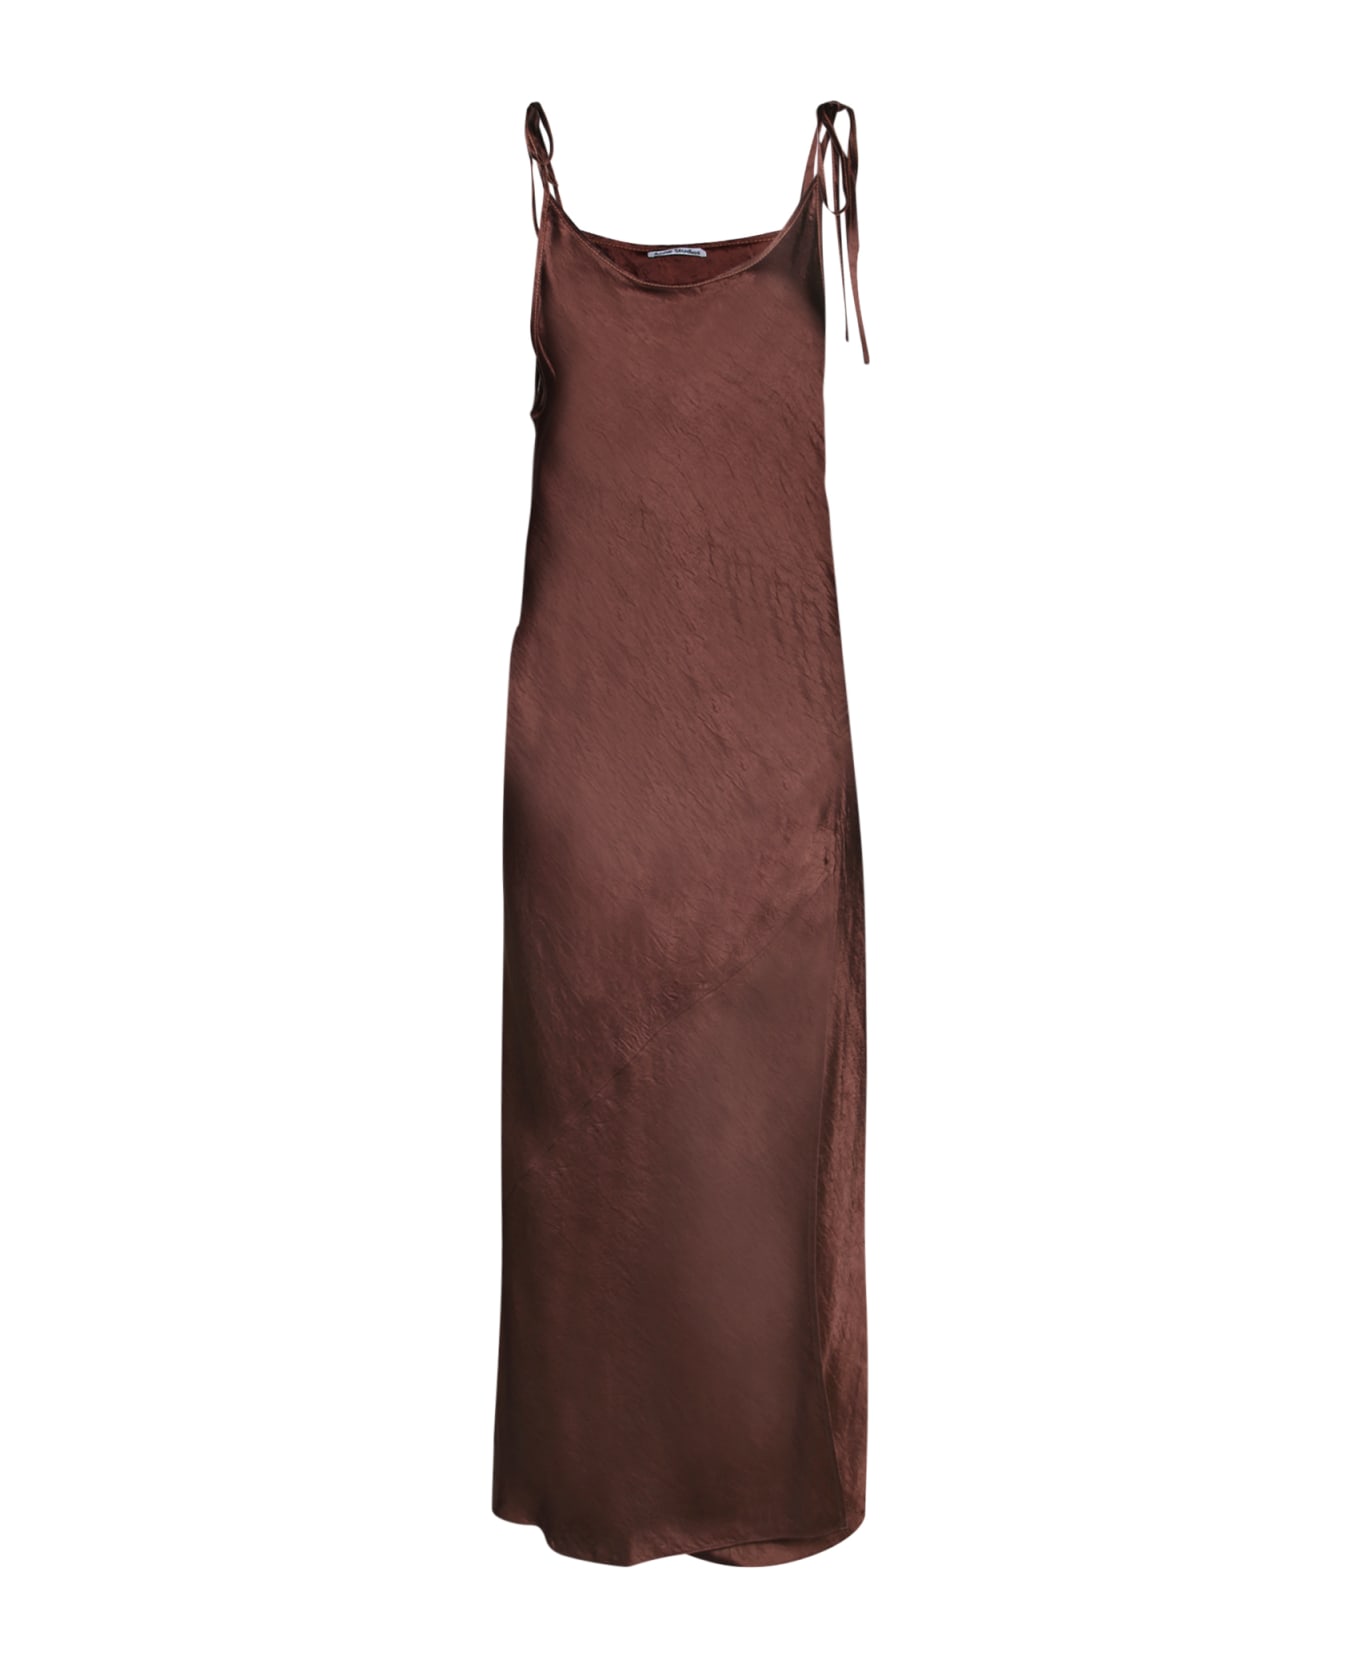 Acne Studios Drapared Brown Dress - Brown